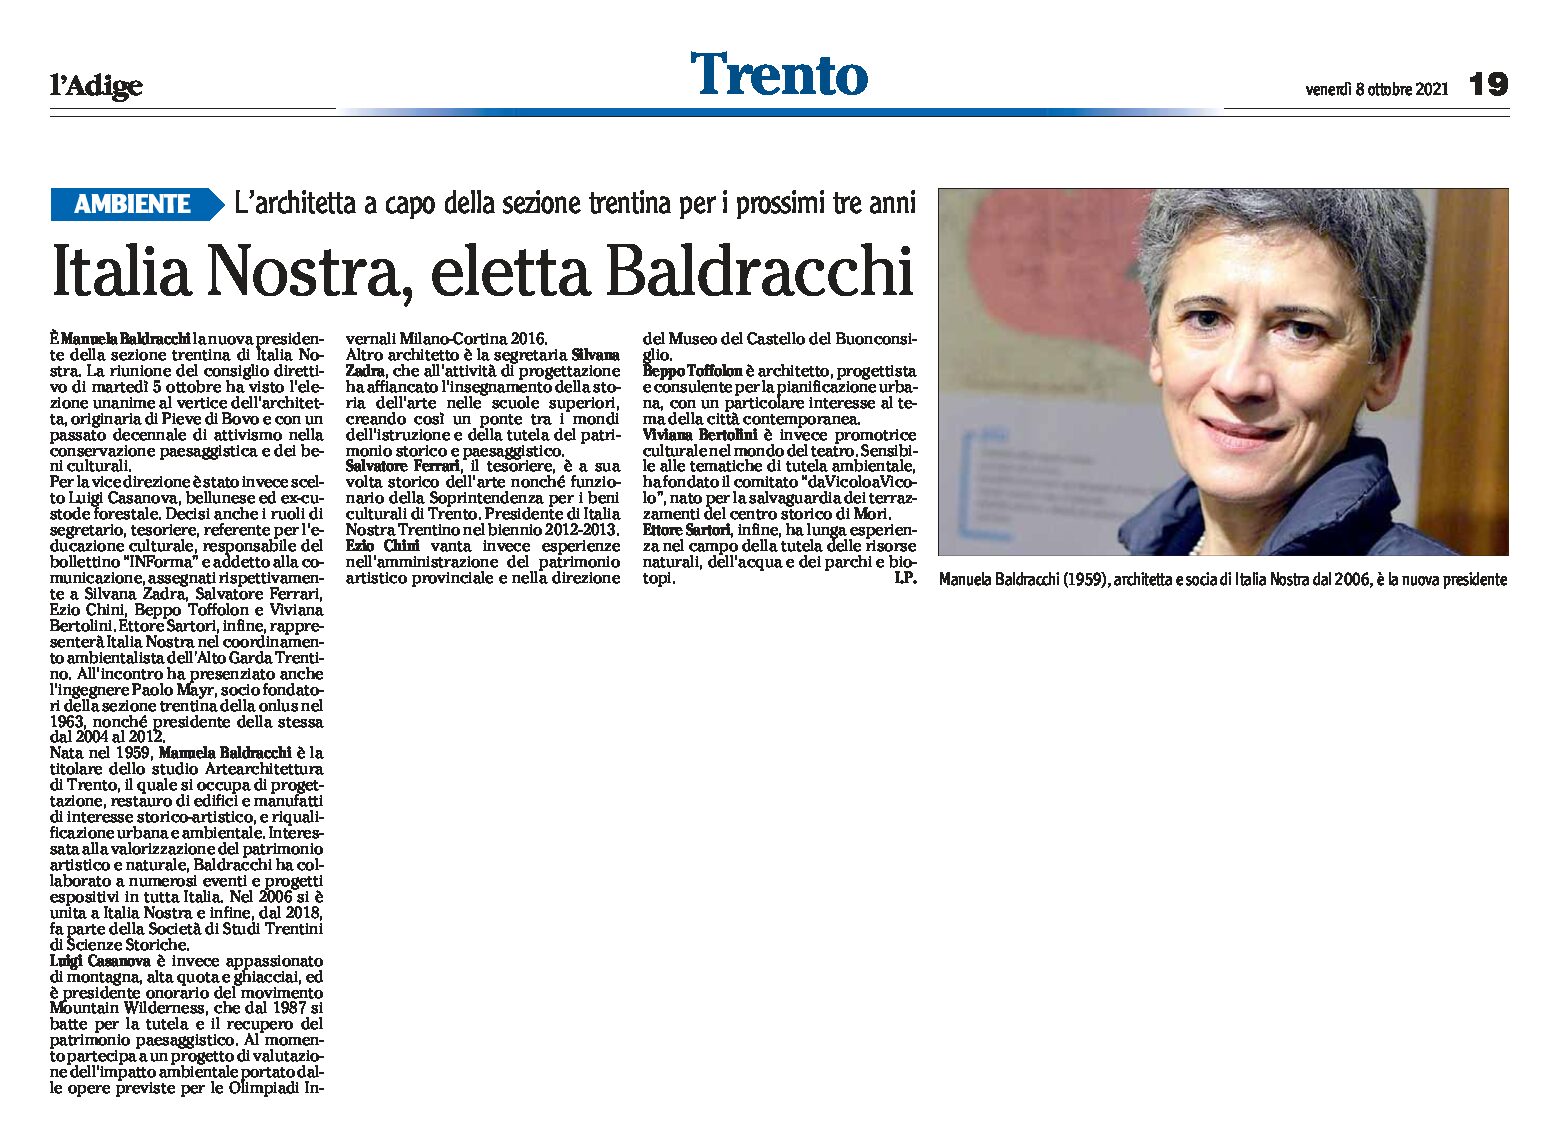 Italia Nostra: Manuela Baldracchi eletta presidente